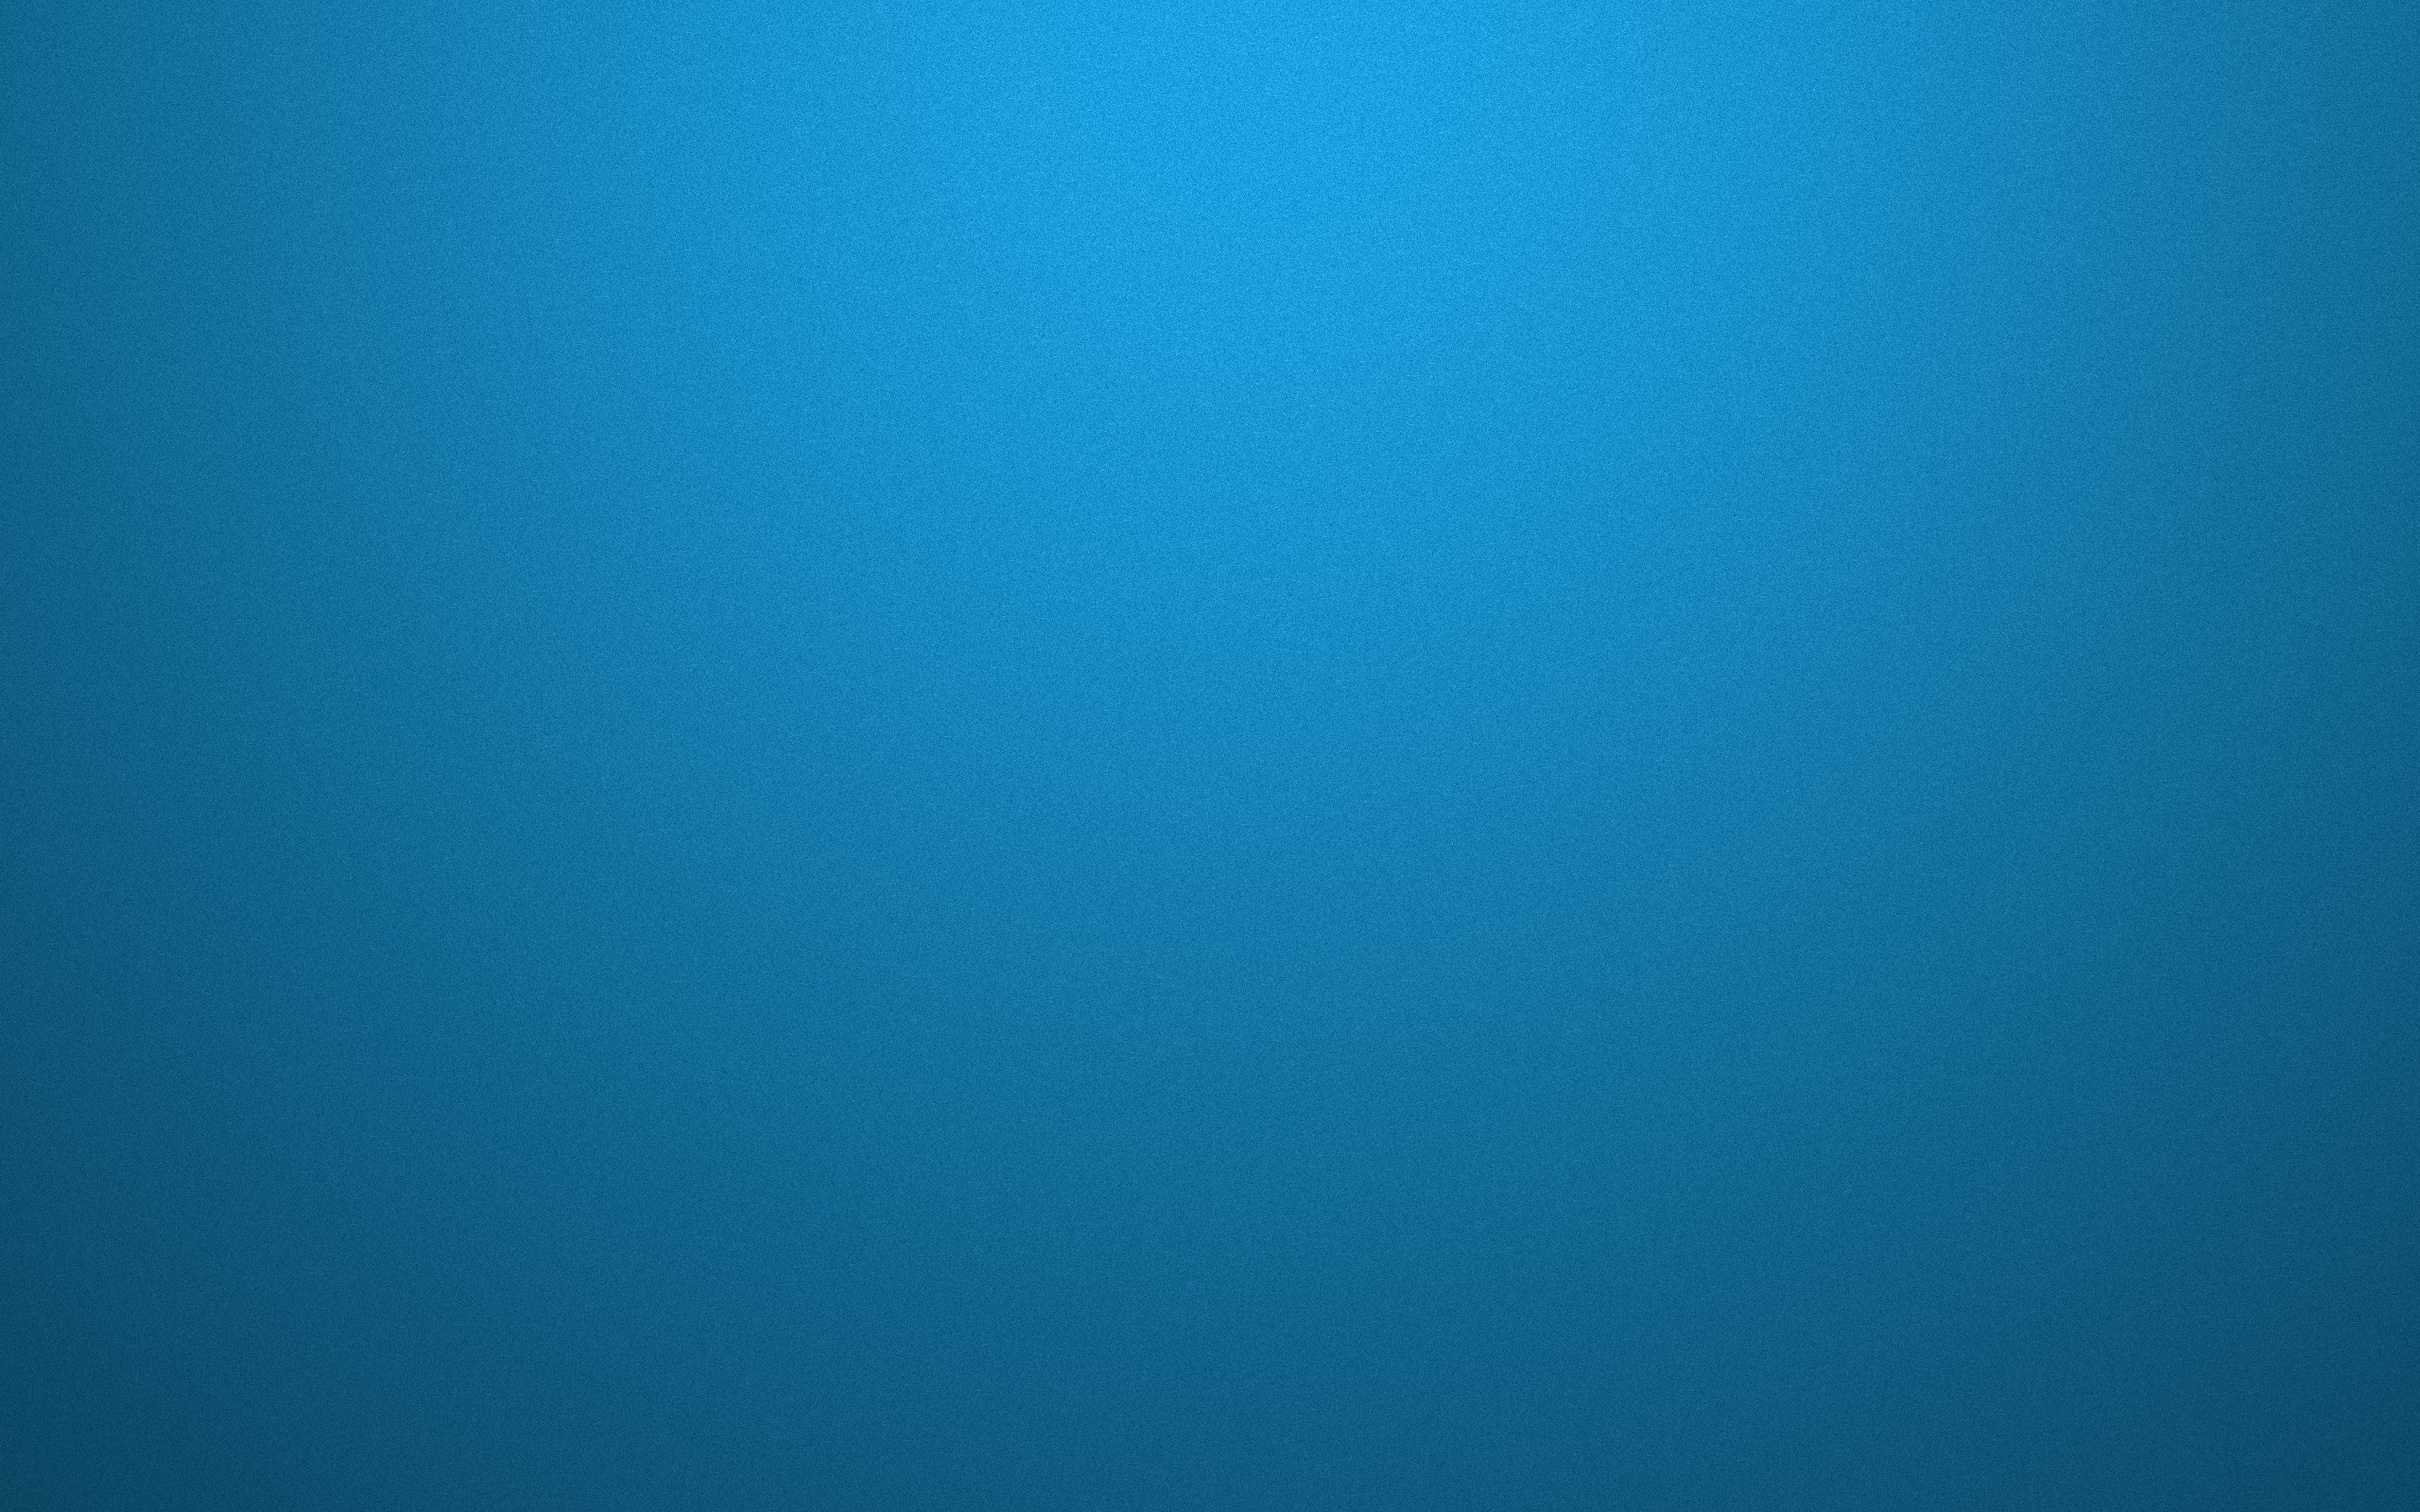 General 2560x1600 blue texture minimalism blue background simple background digital art